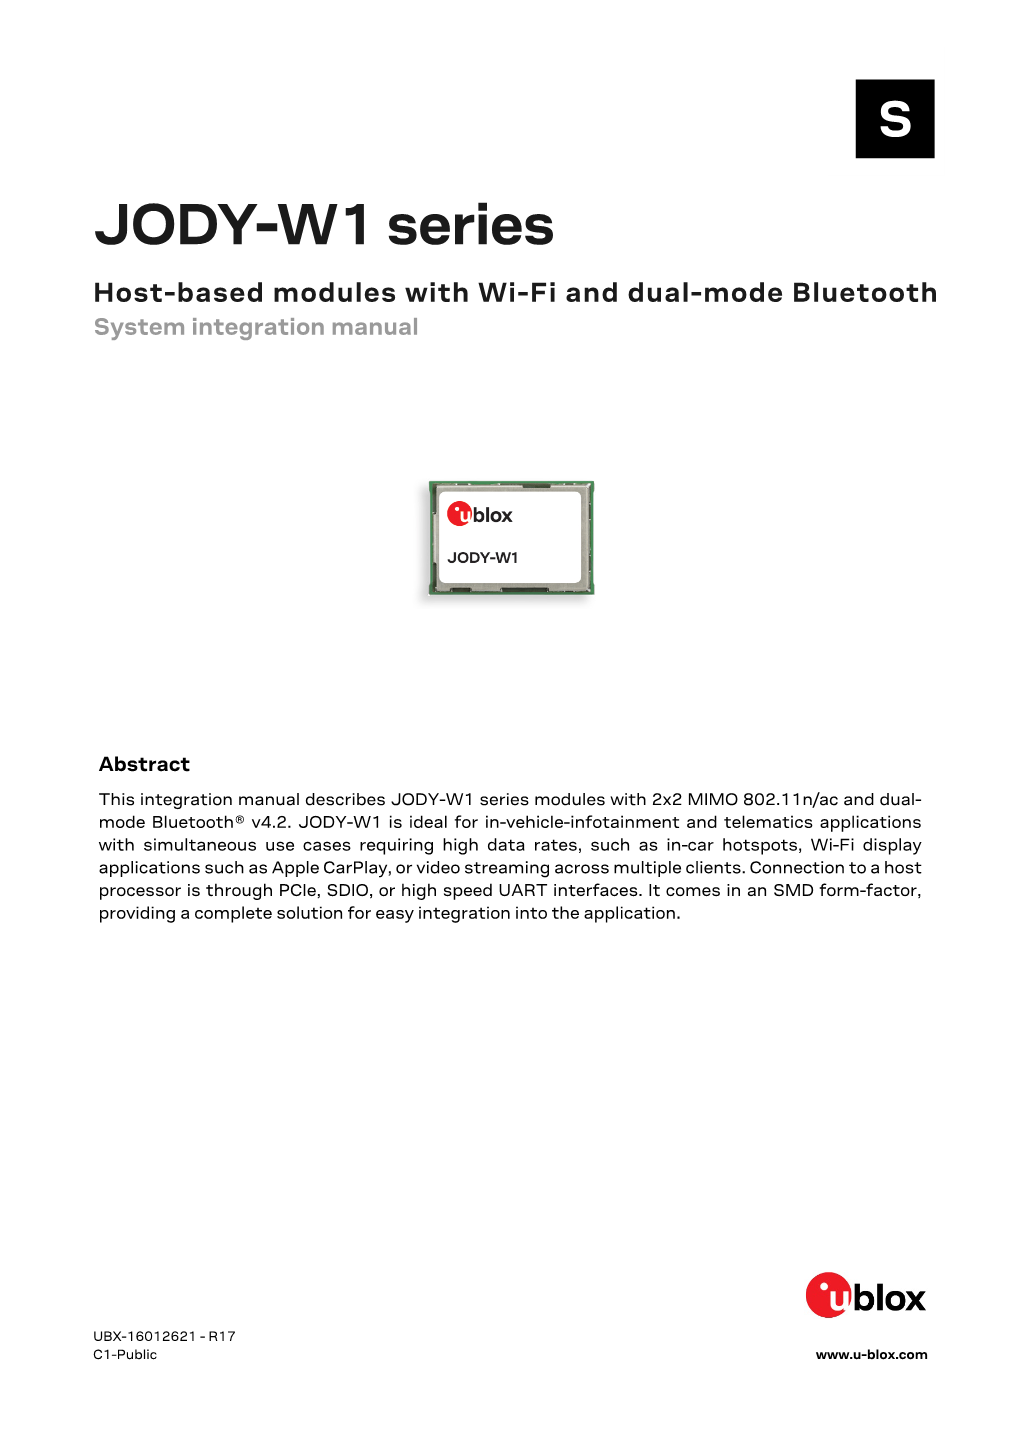 JODY-W1 Series System Integration Manual